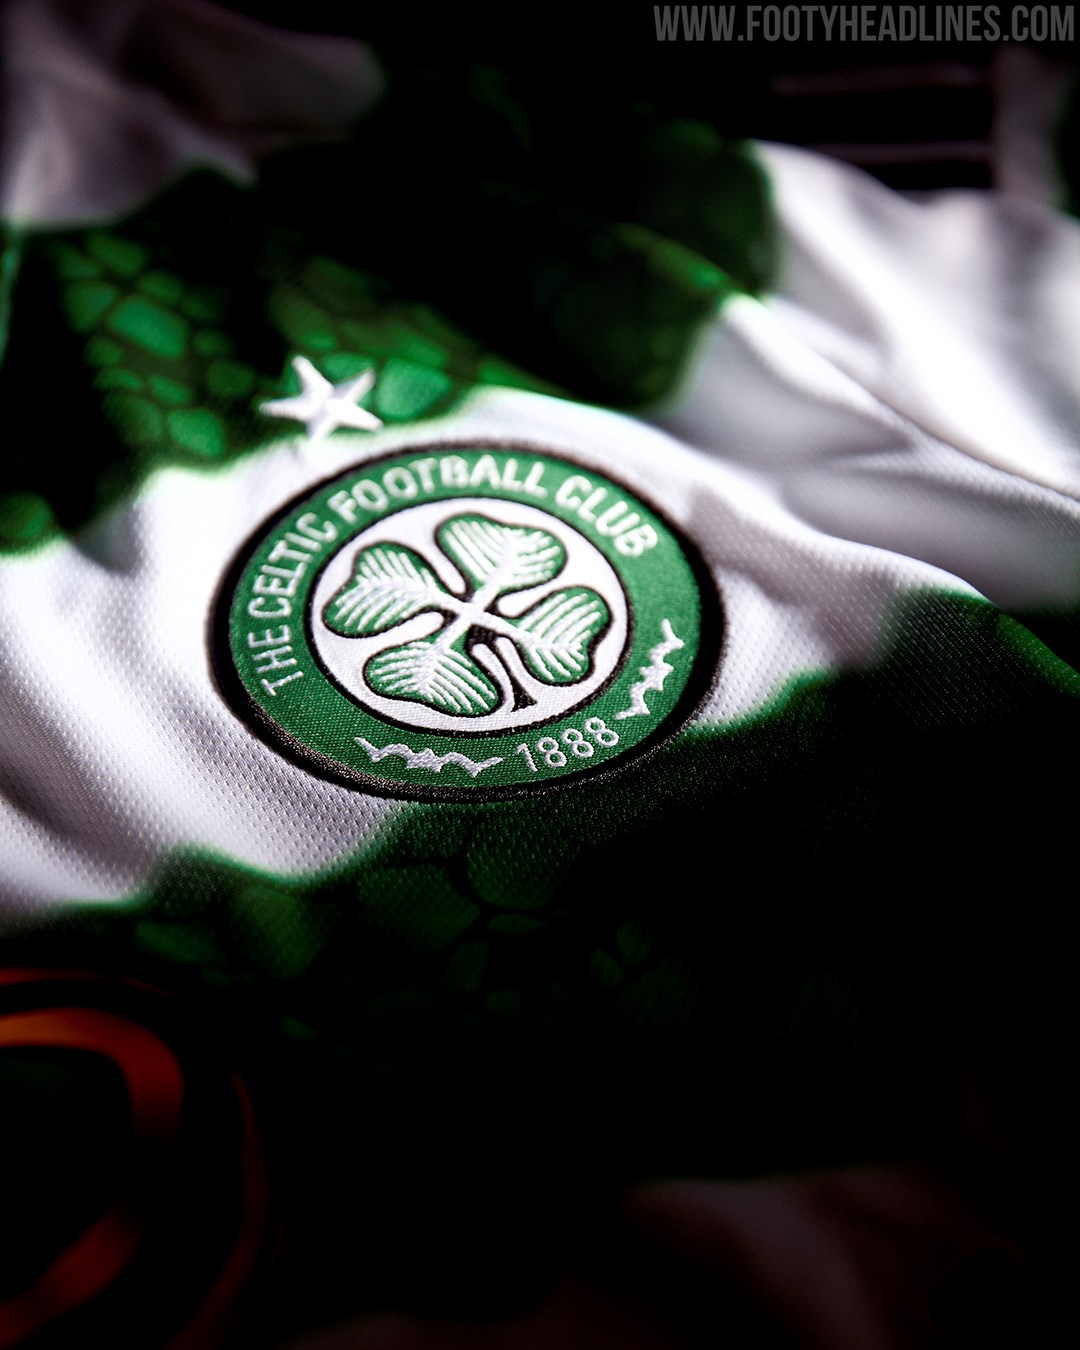 Celtic 23-24 Home Kit Released - Footy Headlines